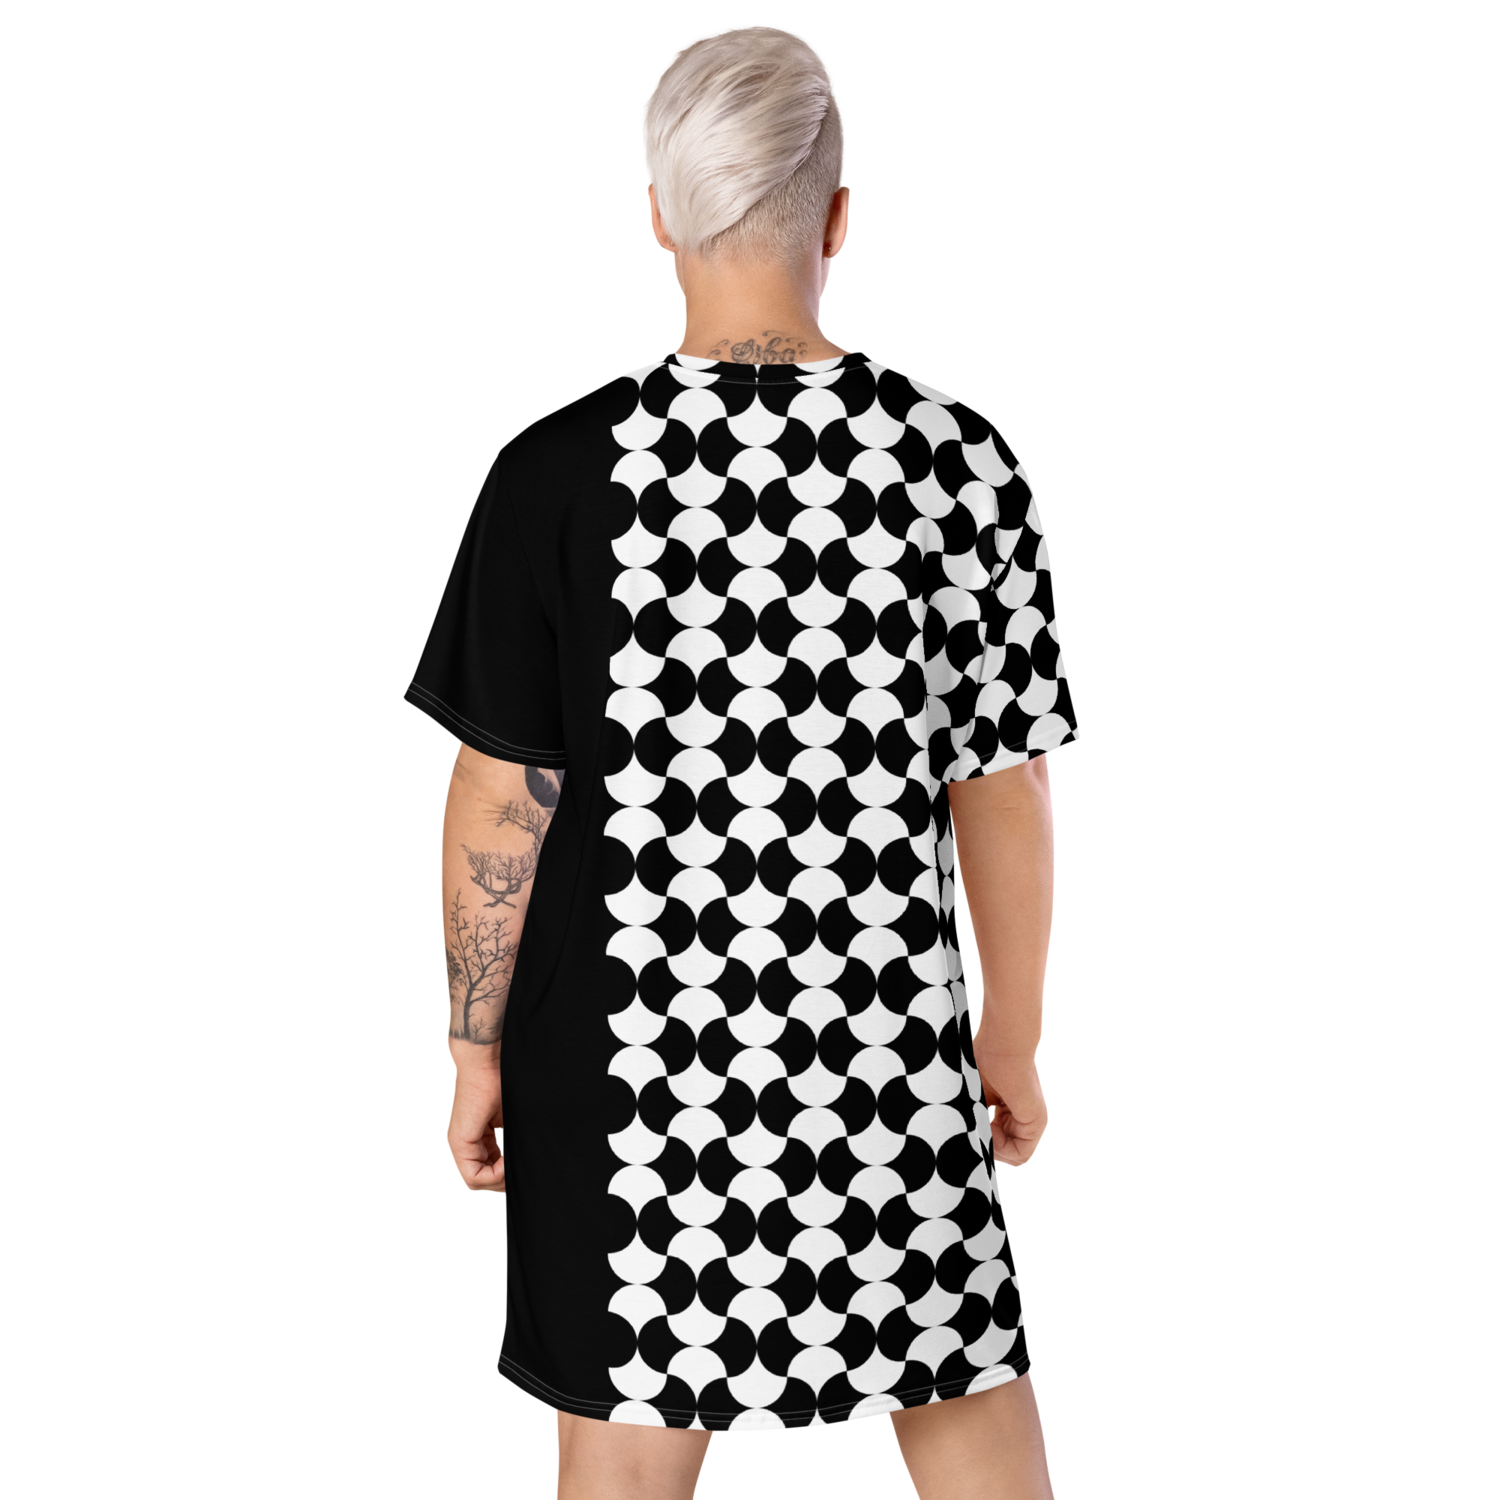 T-shirt Dress Monochrome Short Sleeves Style #3